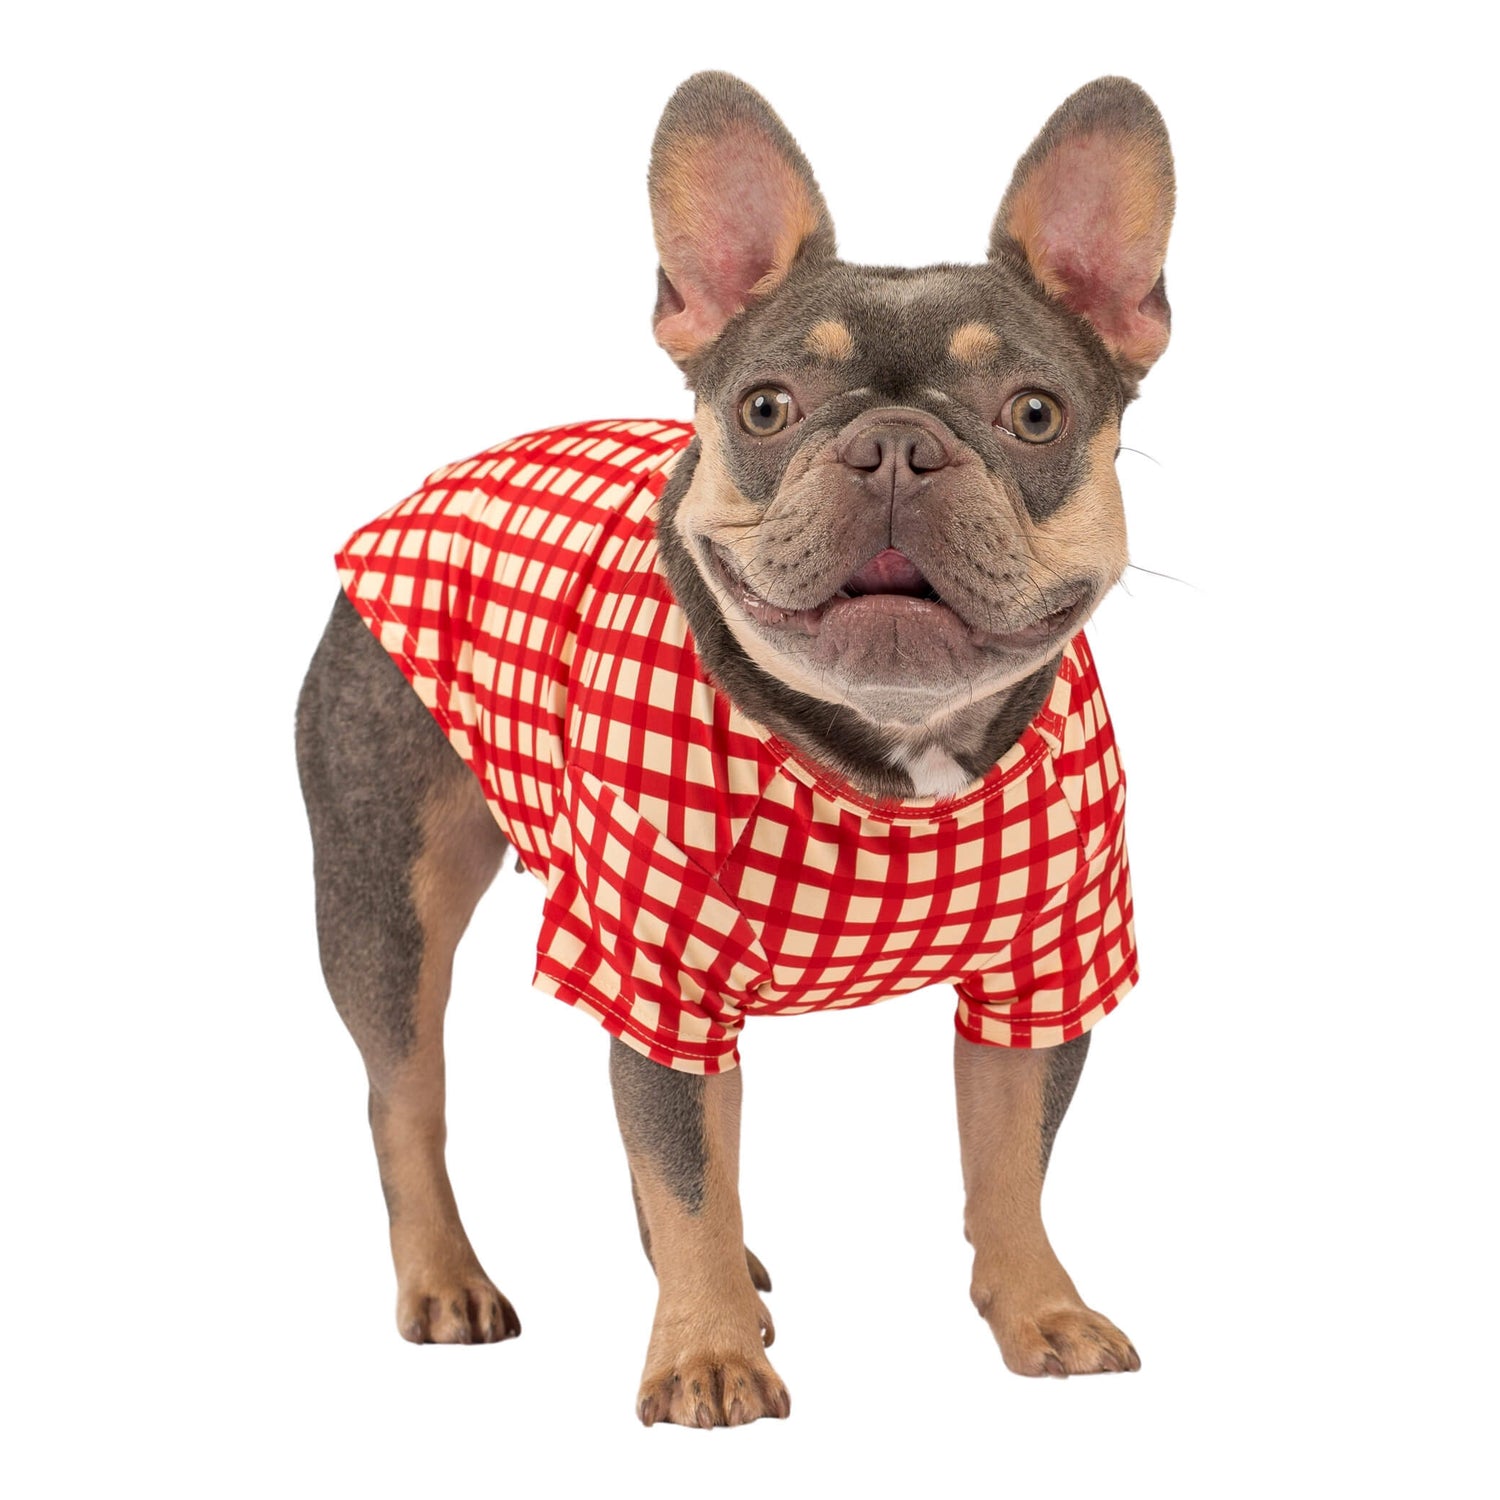 A Lilac Tan French Bulldog standing while wearing a Red Gingham Rash shirt.